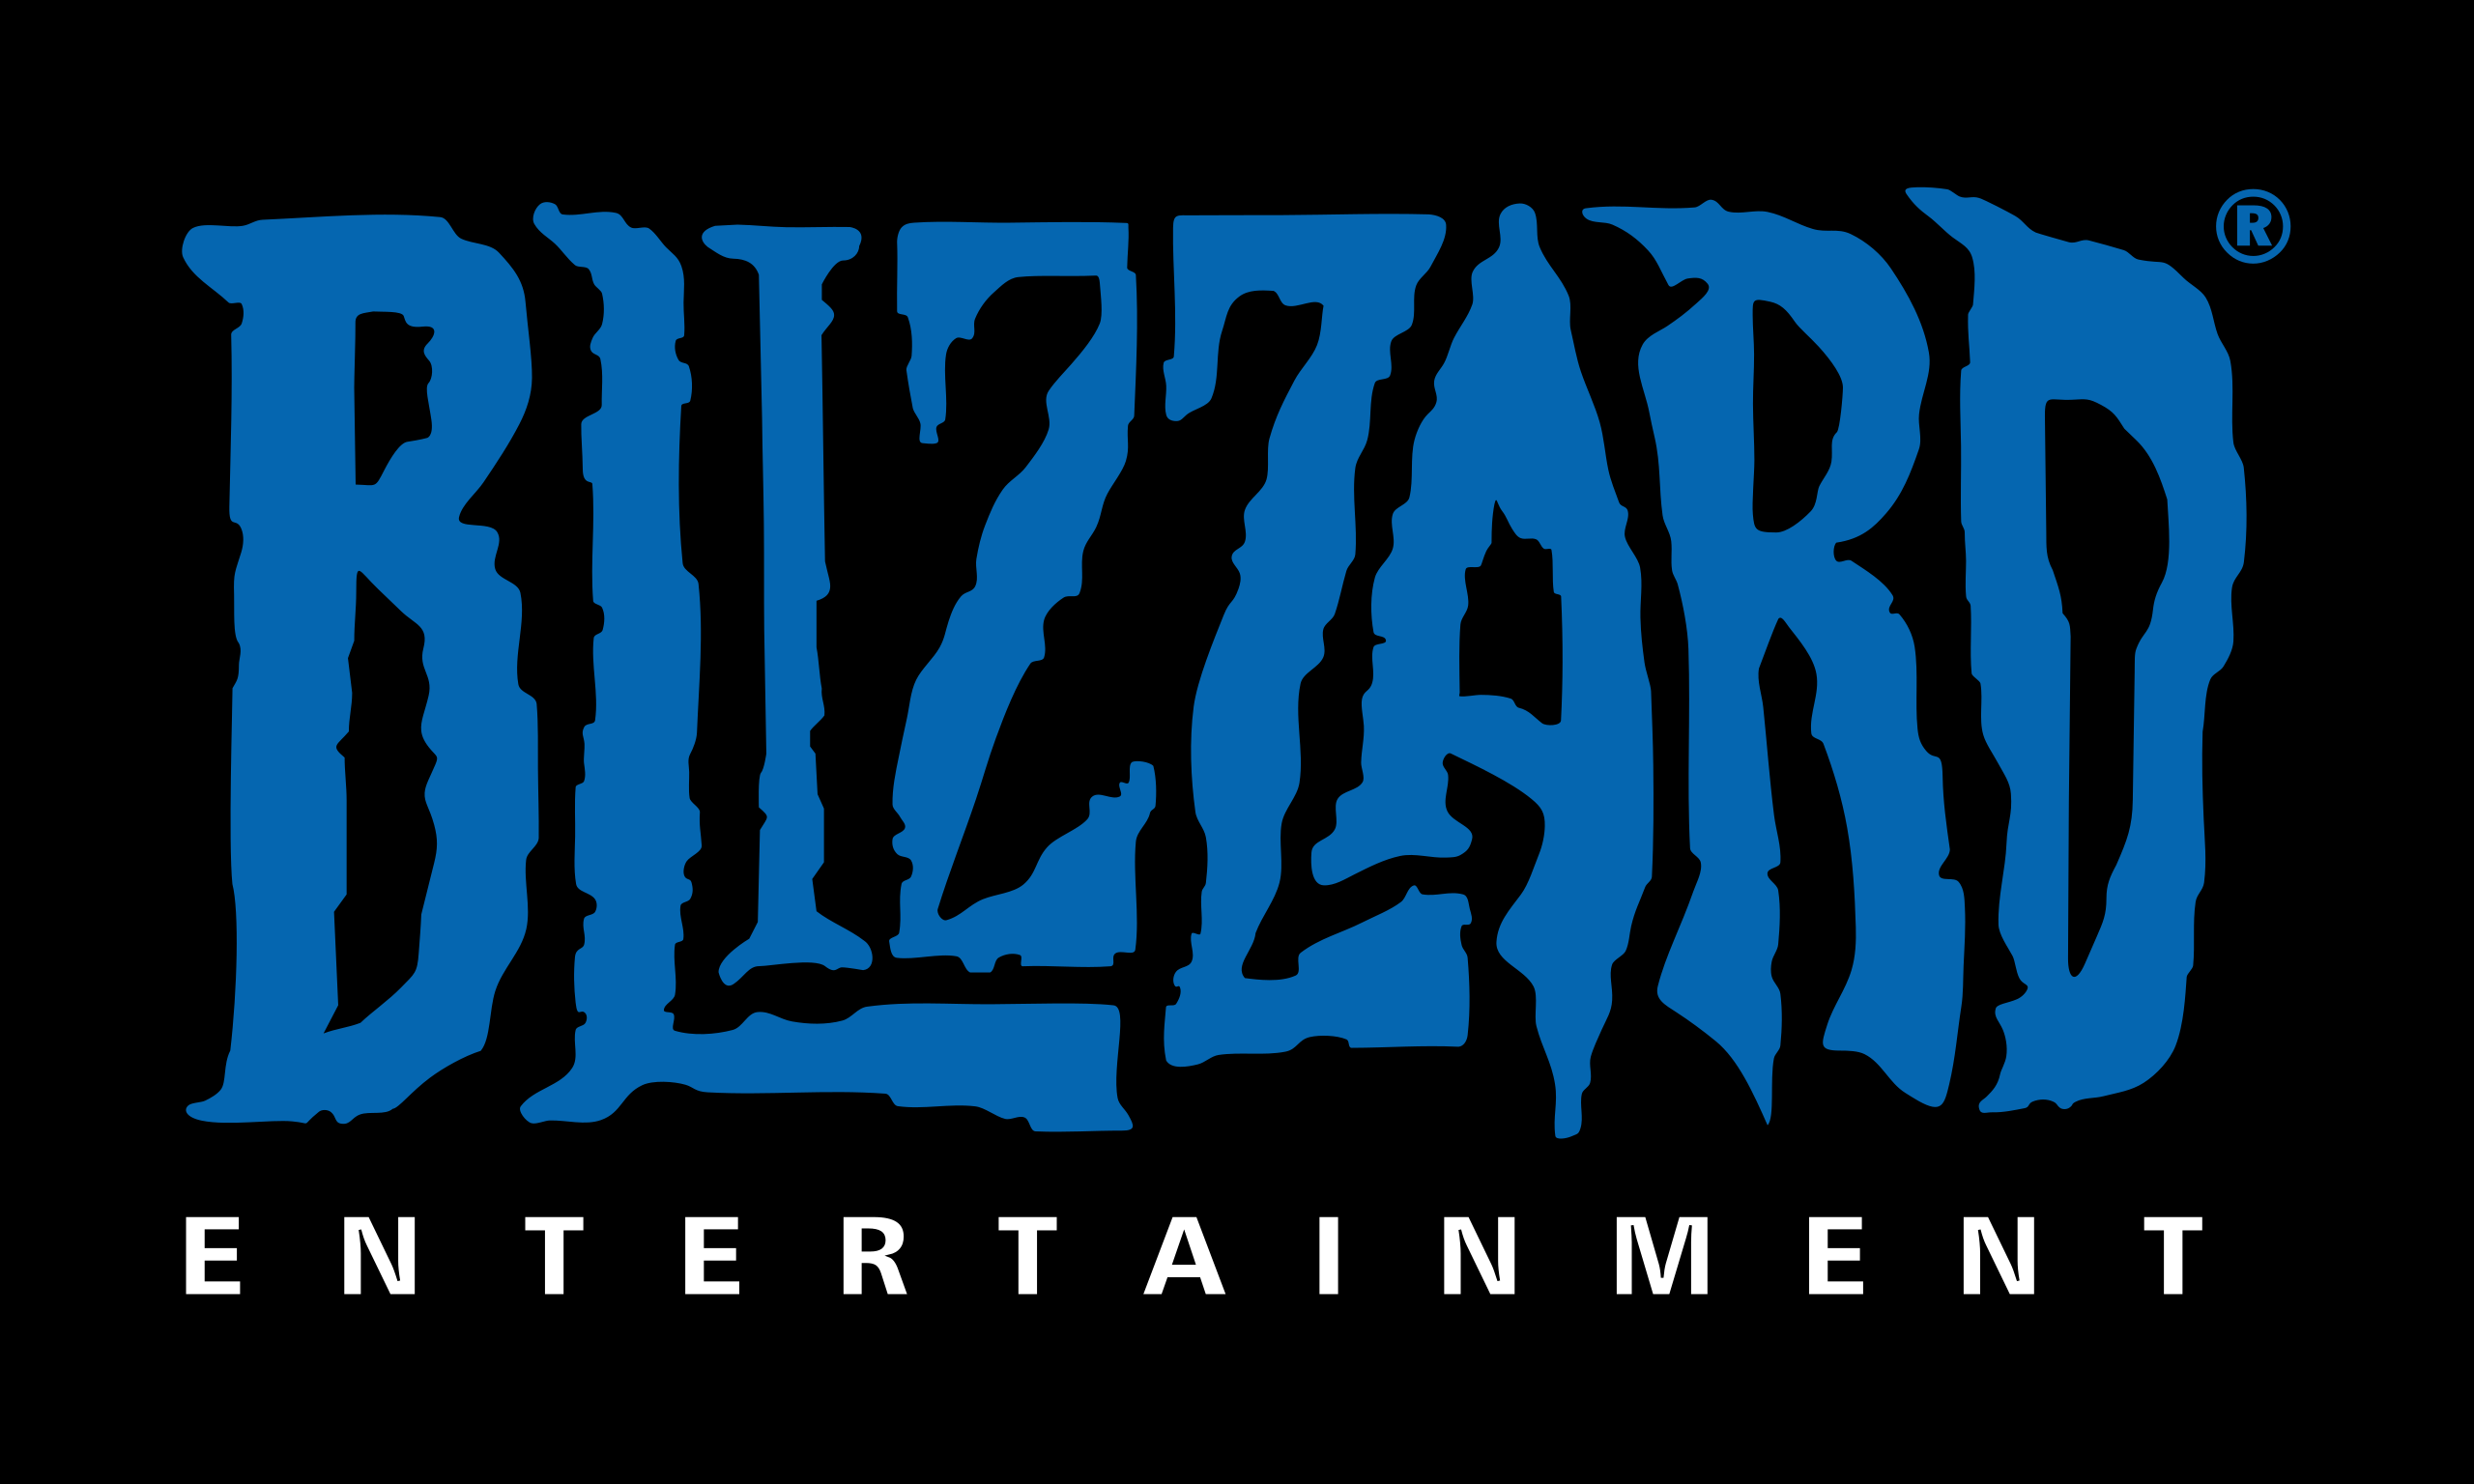 blizzard entertainment logo.svg